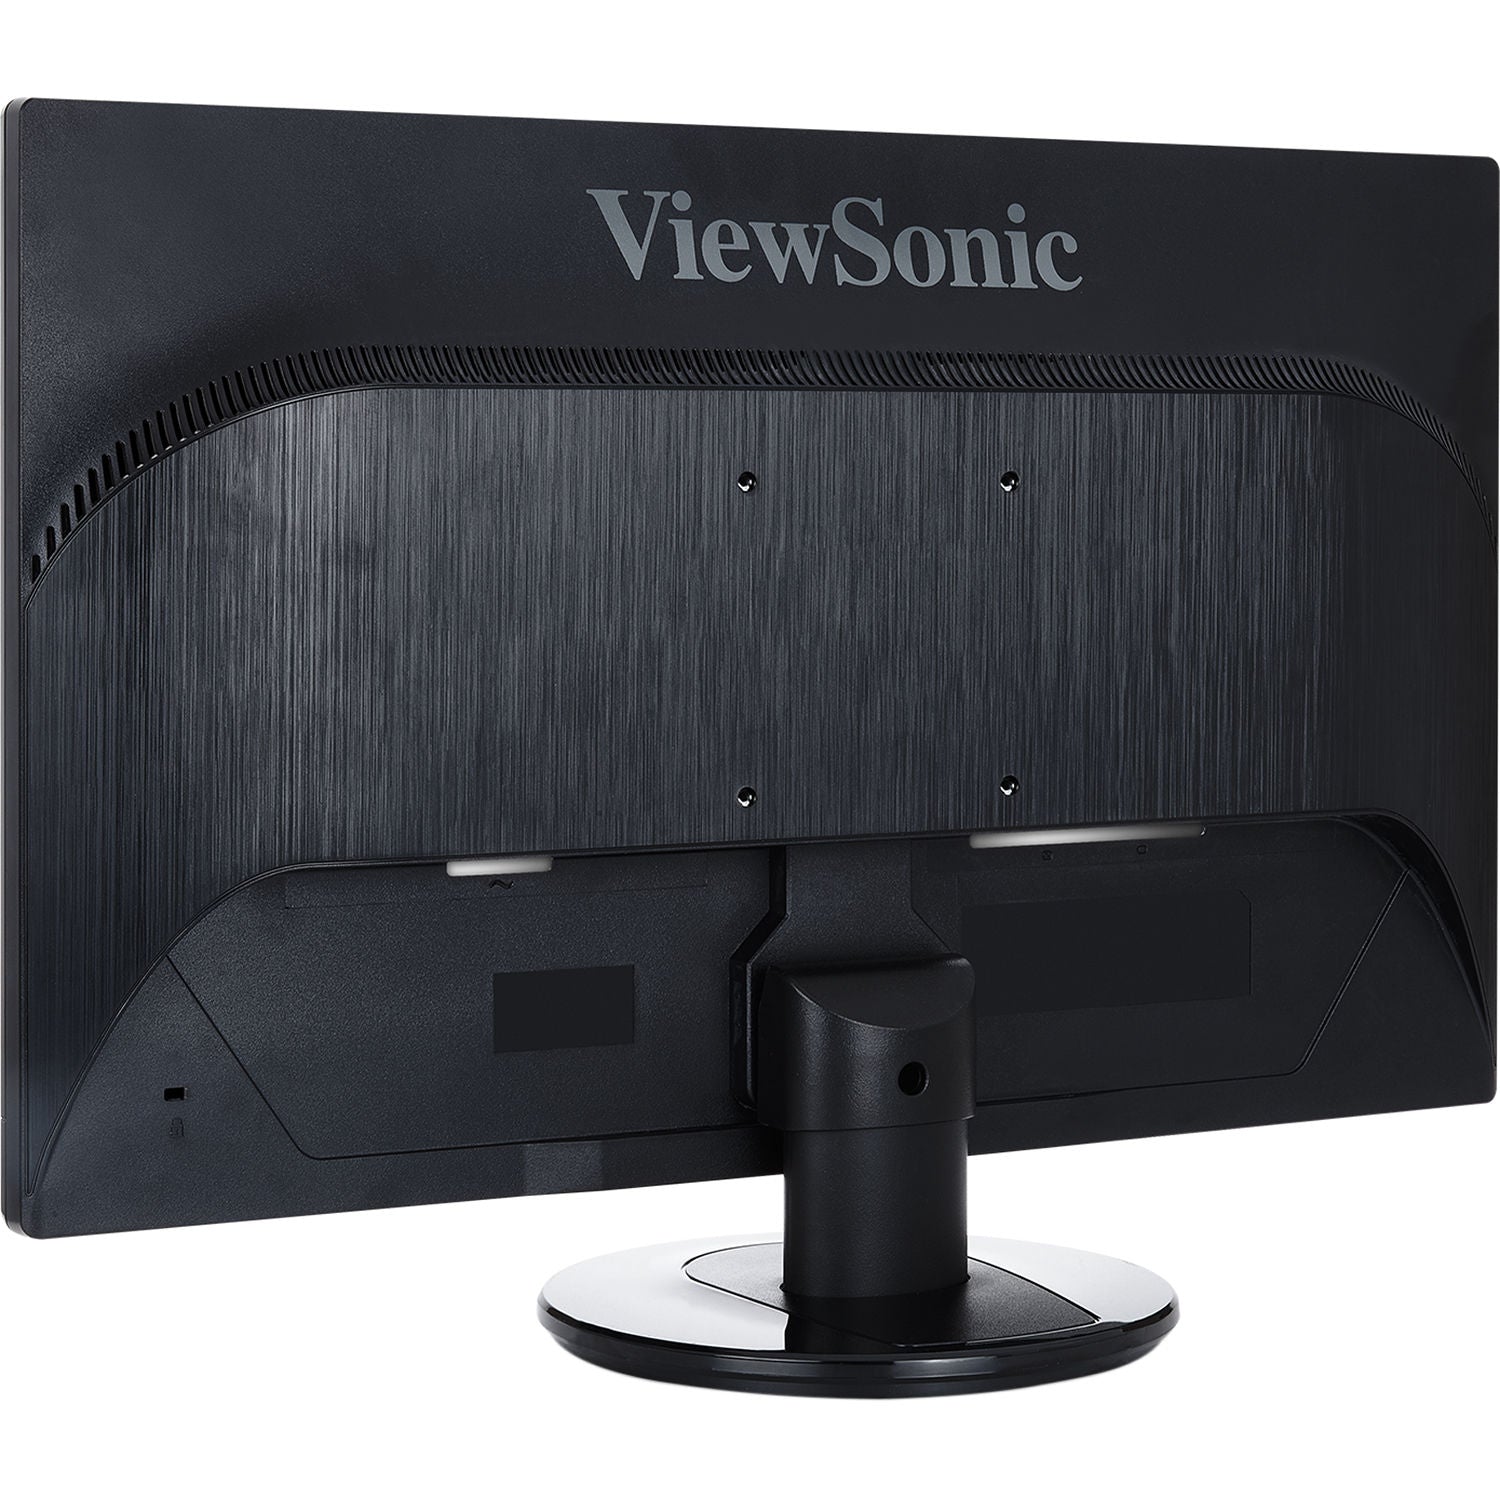 ViewSonic VA2446MH-LED-R 24 Inch Full HD 1080p LED Monitor - C Grade Refurbished